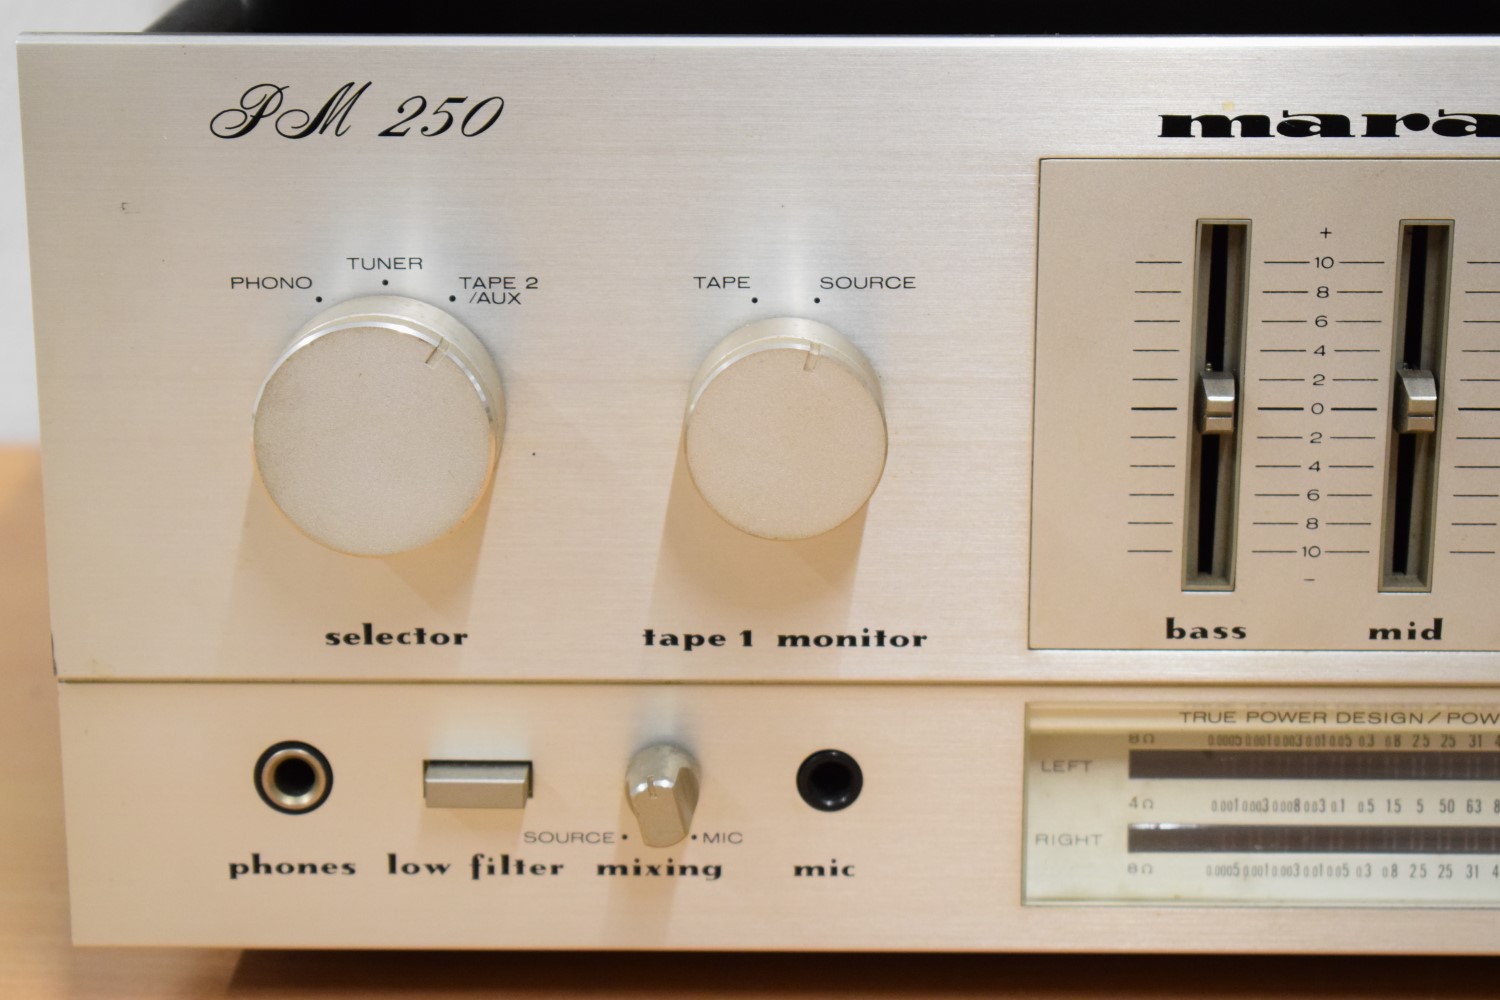 Marantz PM-250 Amplifier & Marantz ST-300L Tuner Stereo-Set